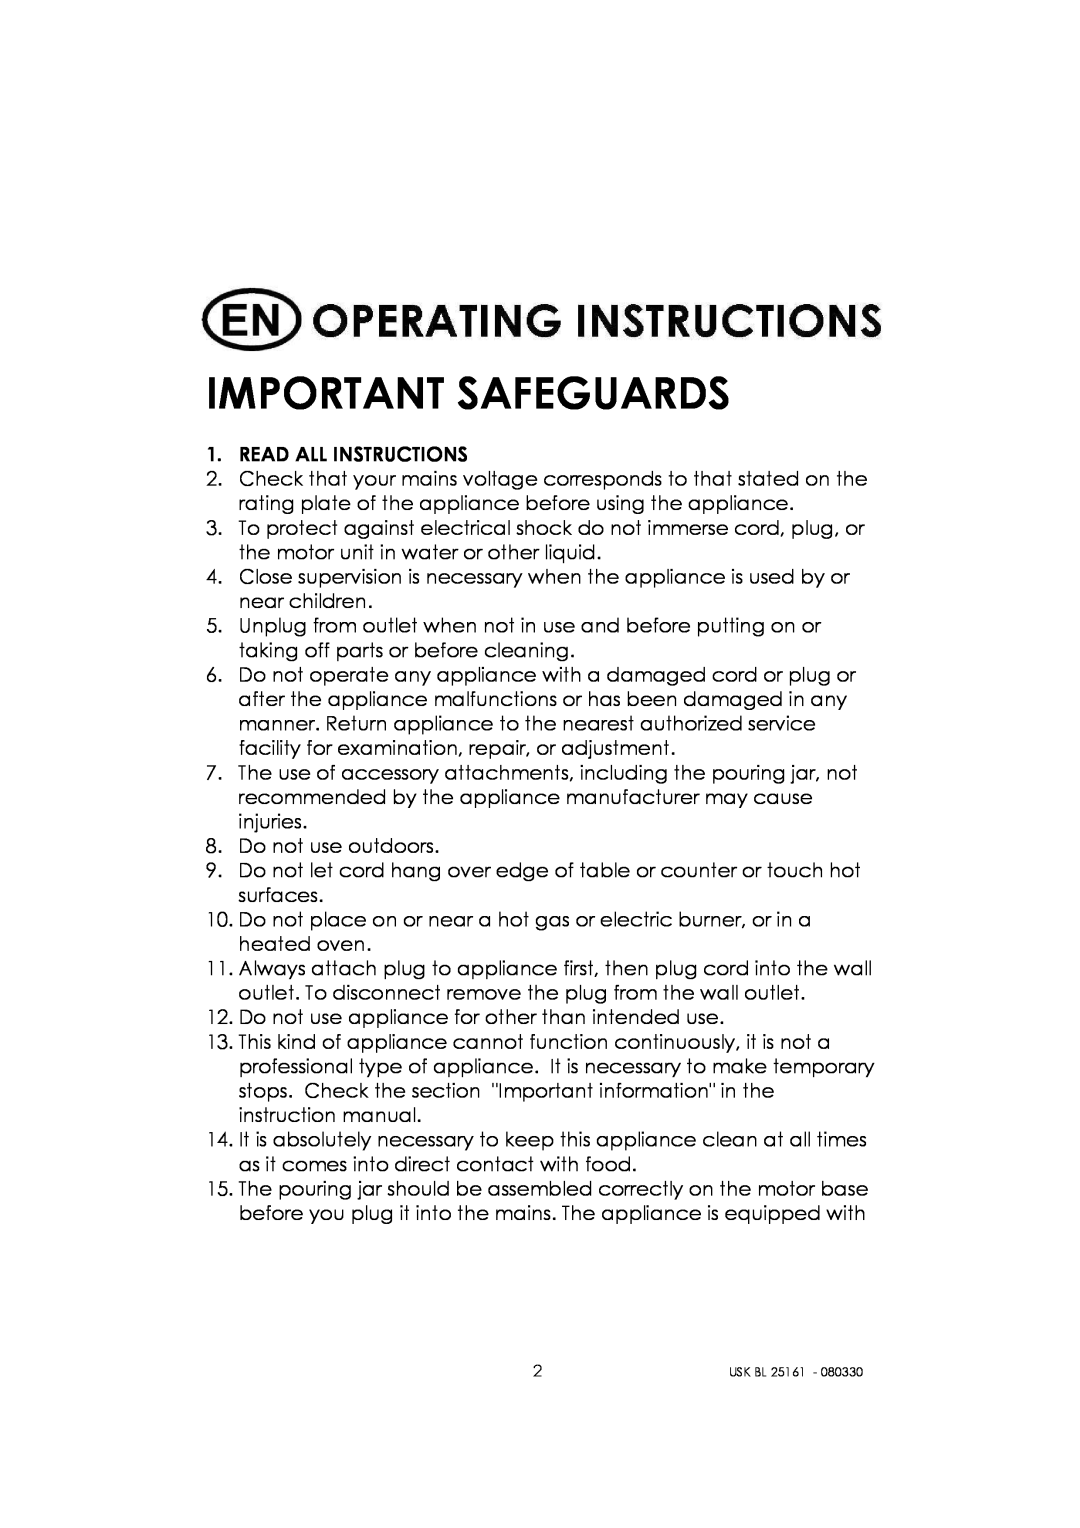 Kalorik usk bl 25161 manual Important Safeguards 